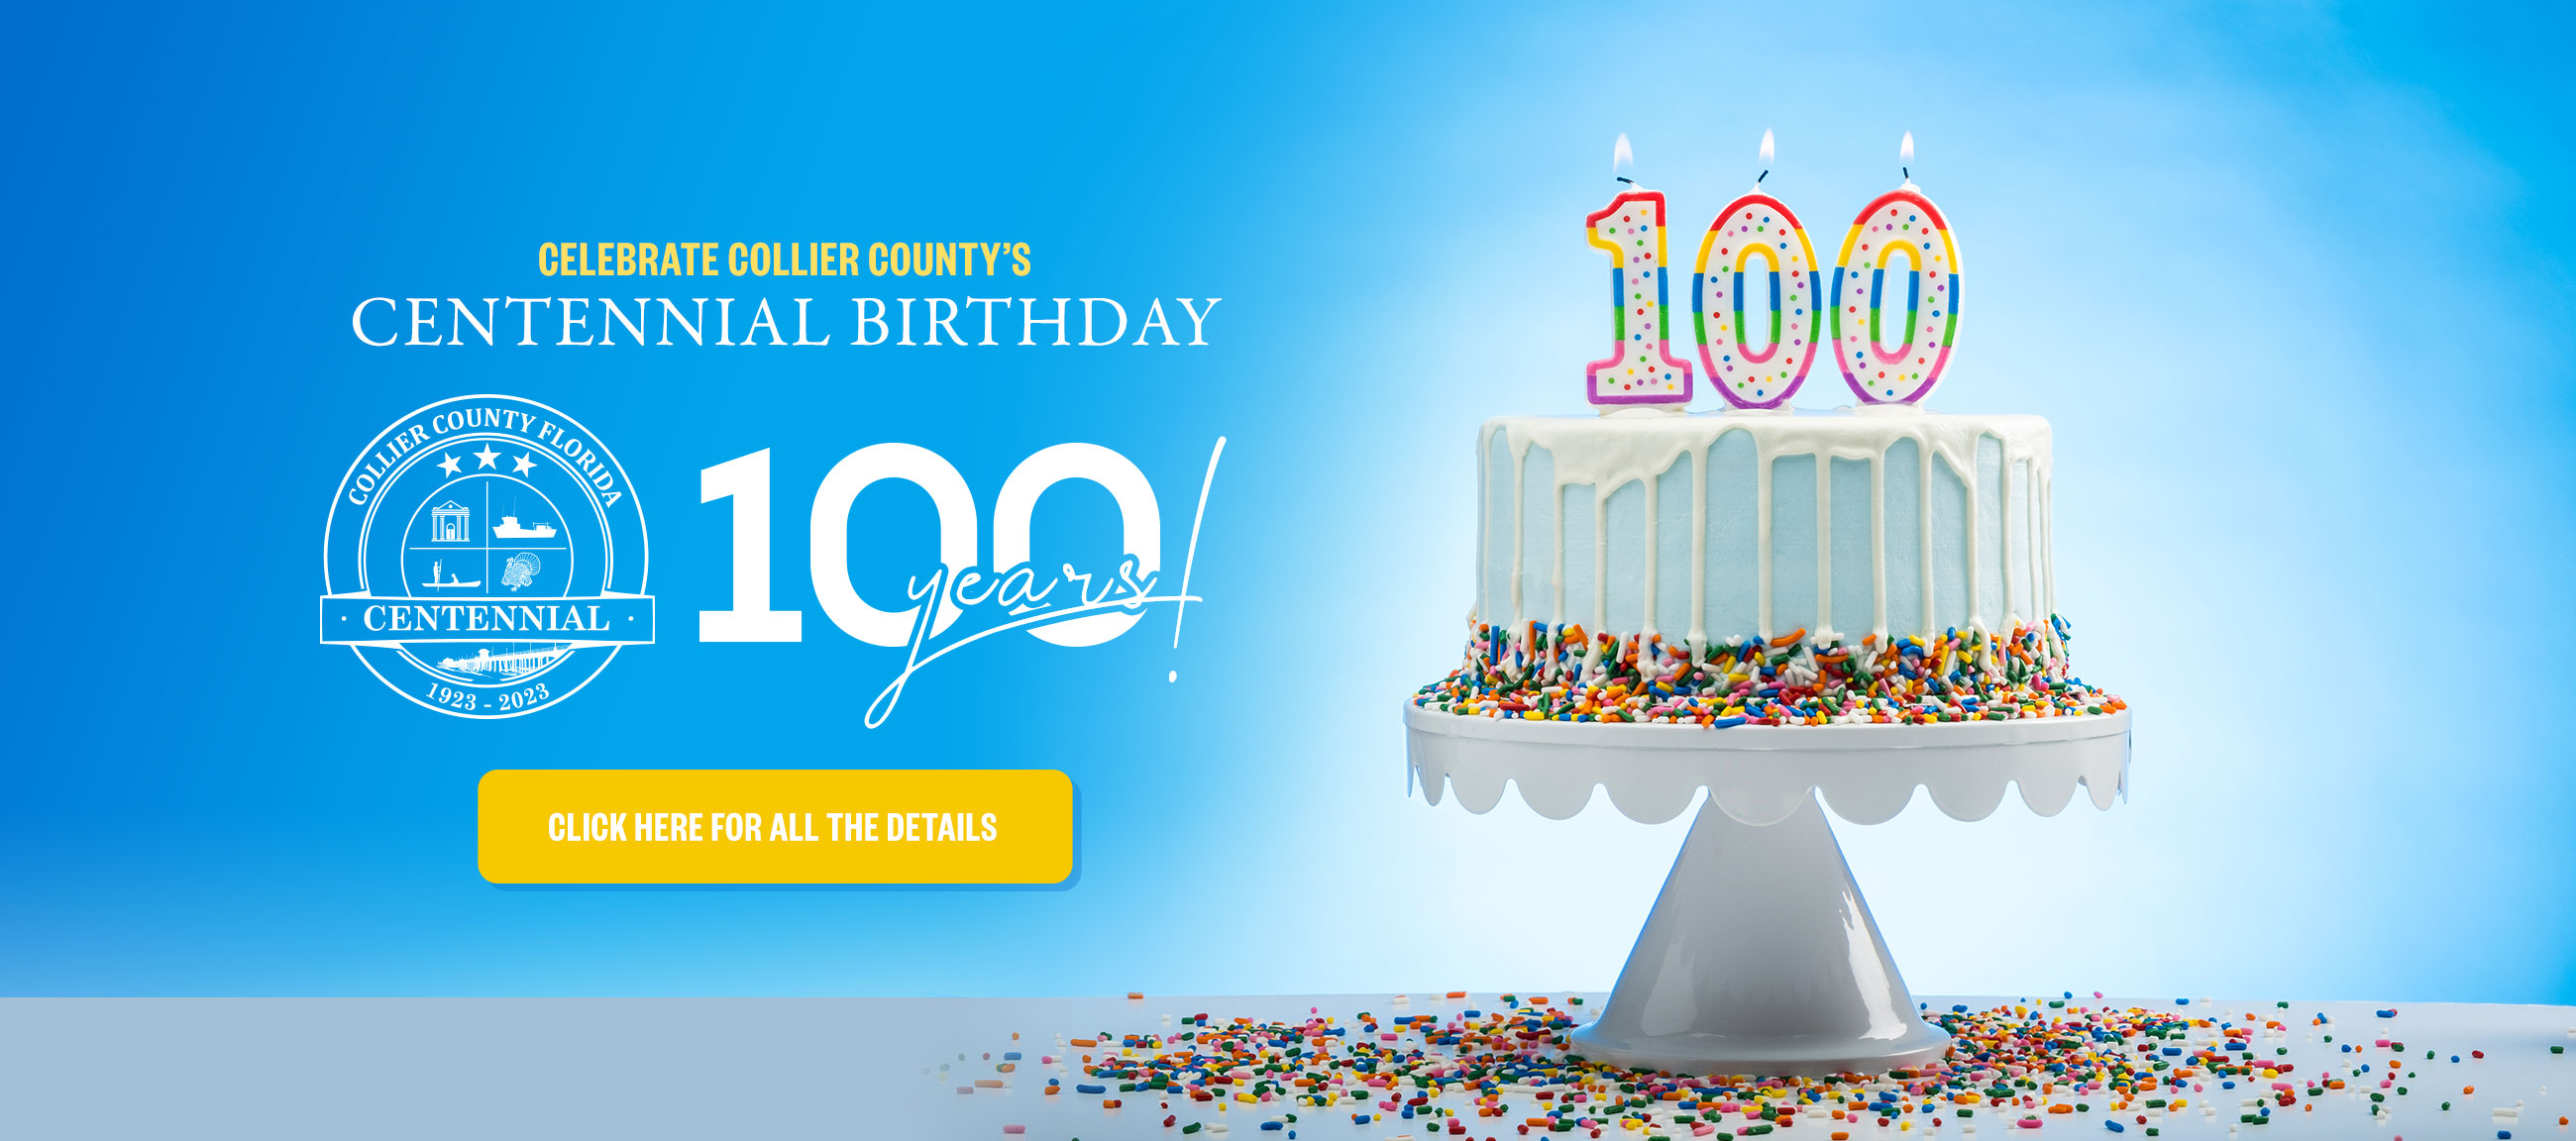 Celebrate Collier County’s Centennial Birthday